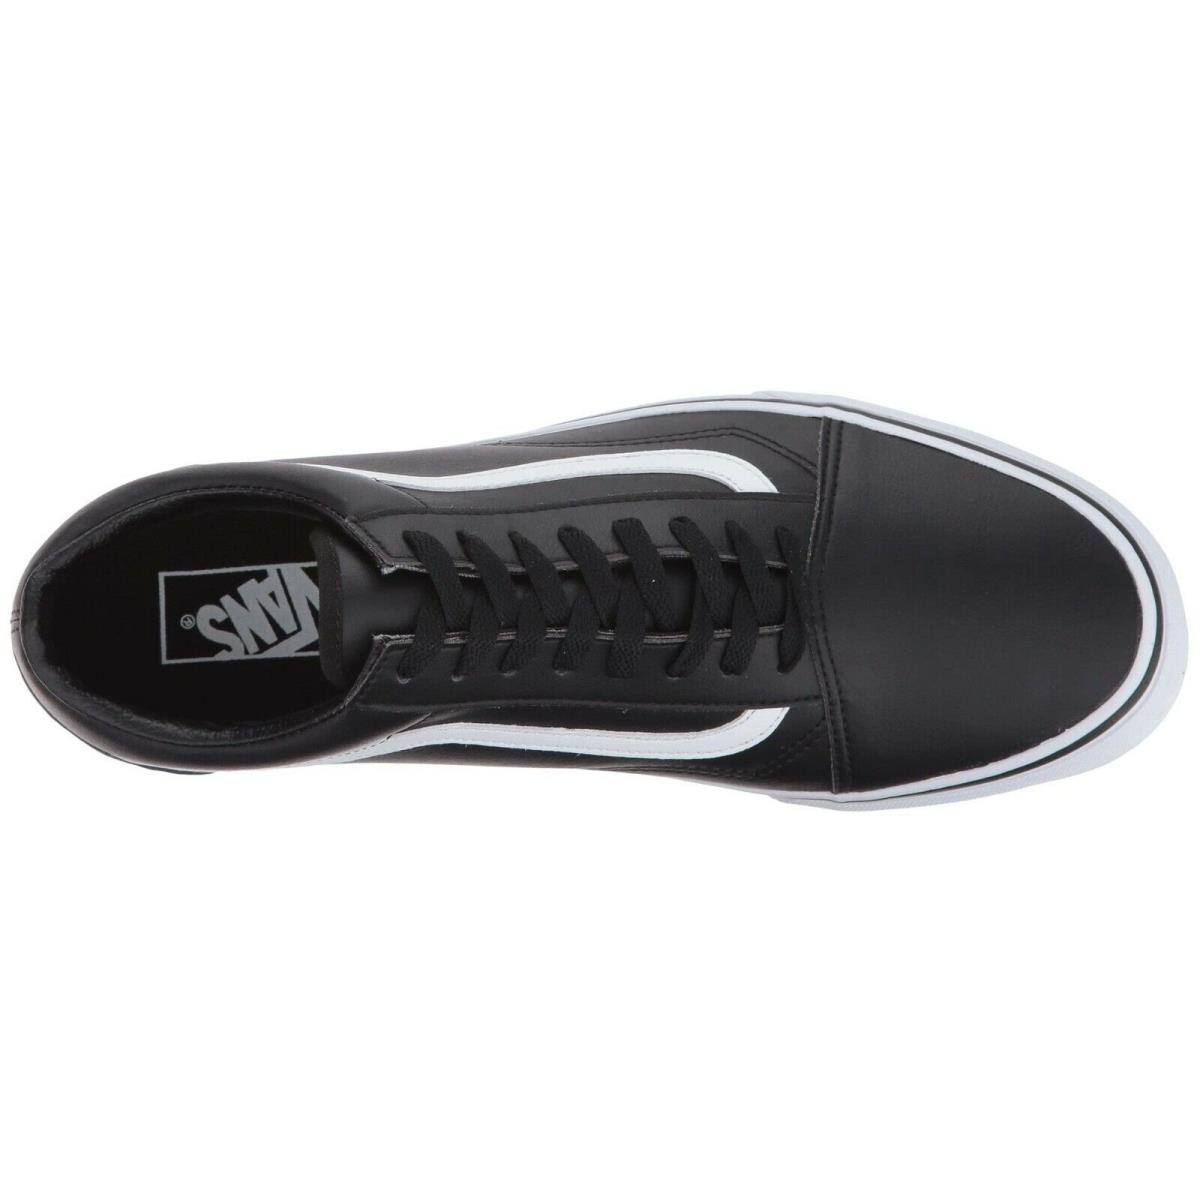 Vans shoes Old Skool ComfyCush - Black/ White 5